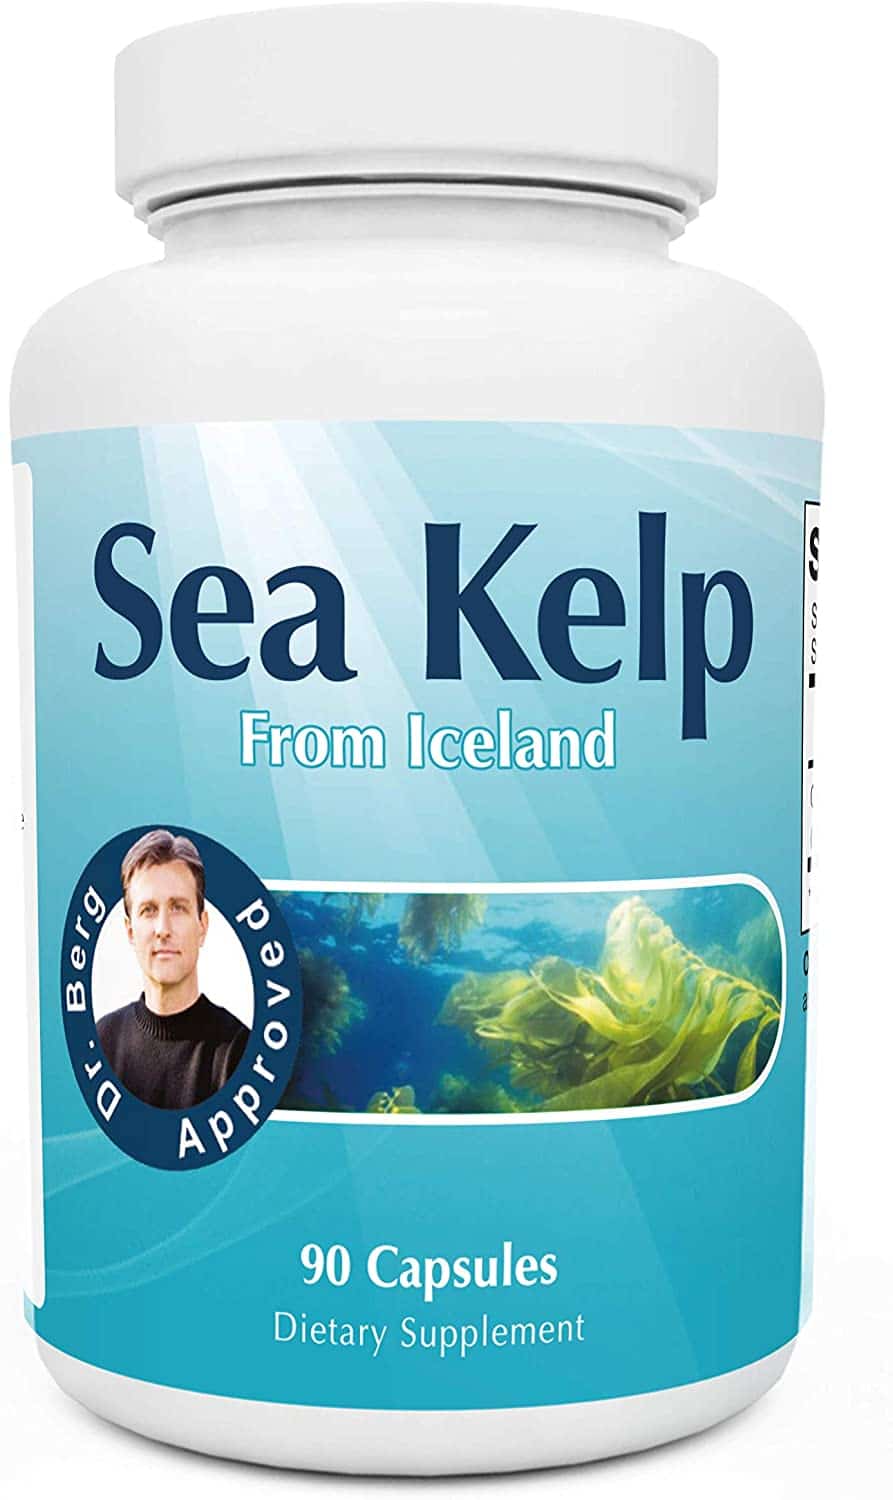 3. Dr. Berg's Icelandic Sea Kelp Supplement